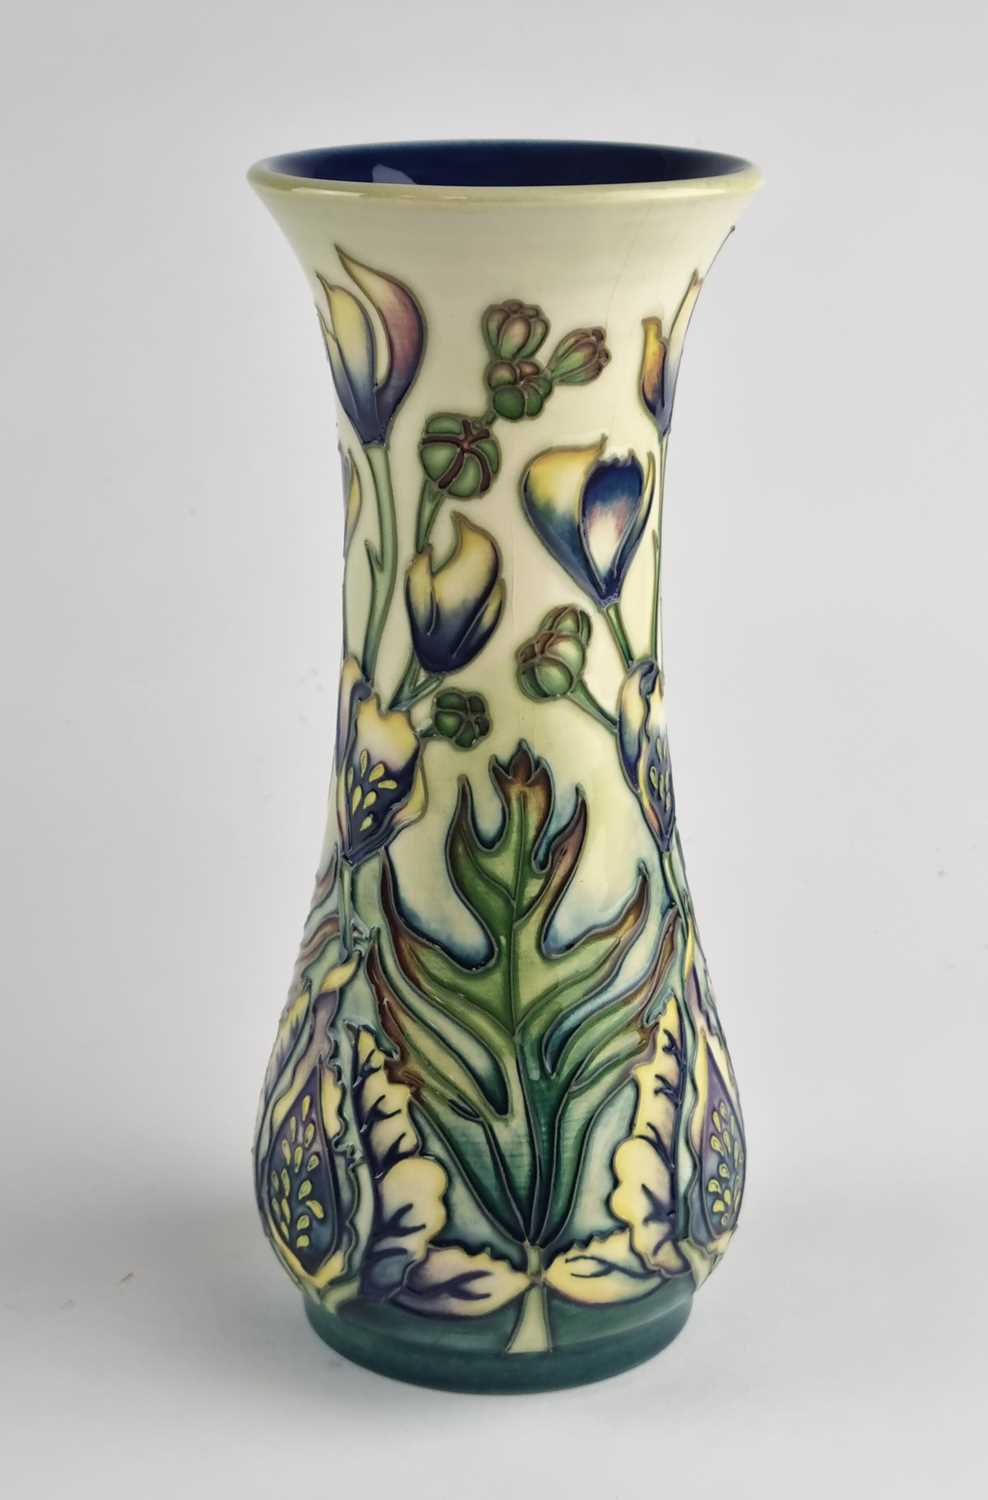 Lot Moorcroft 'Monkshood' vase designed by Philip Gibson